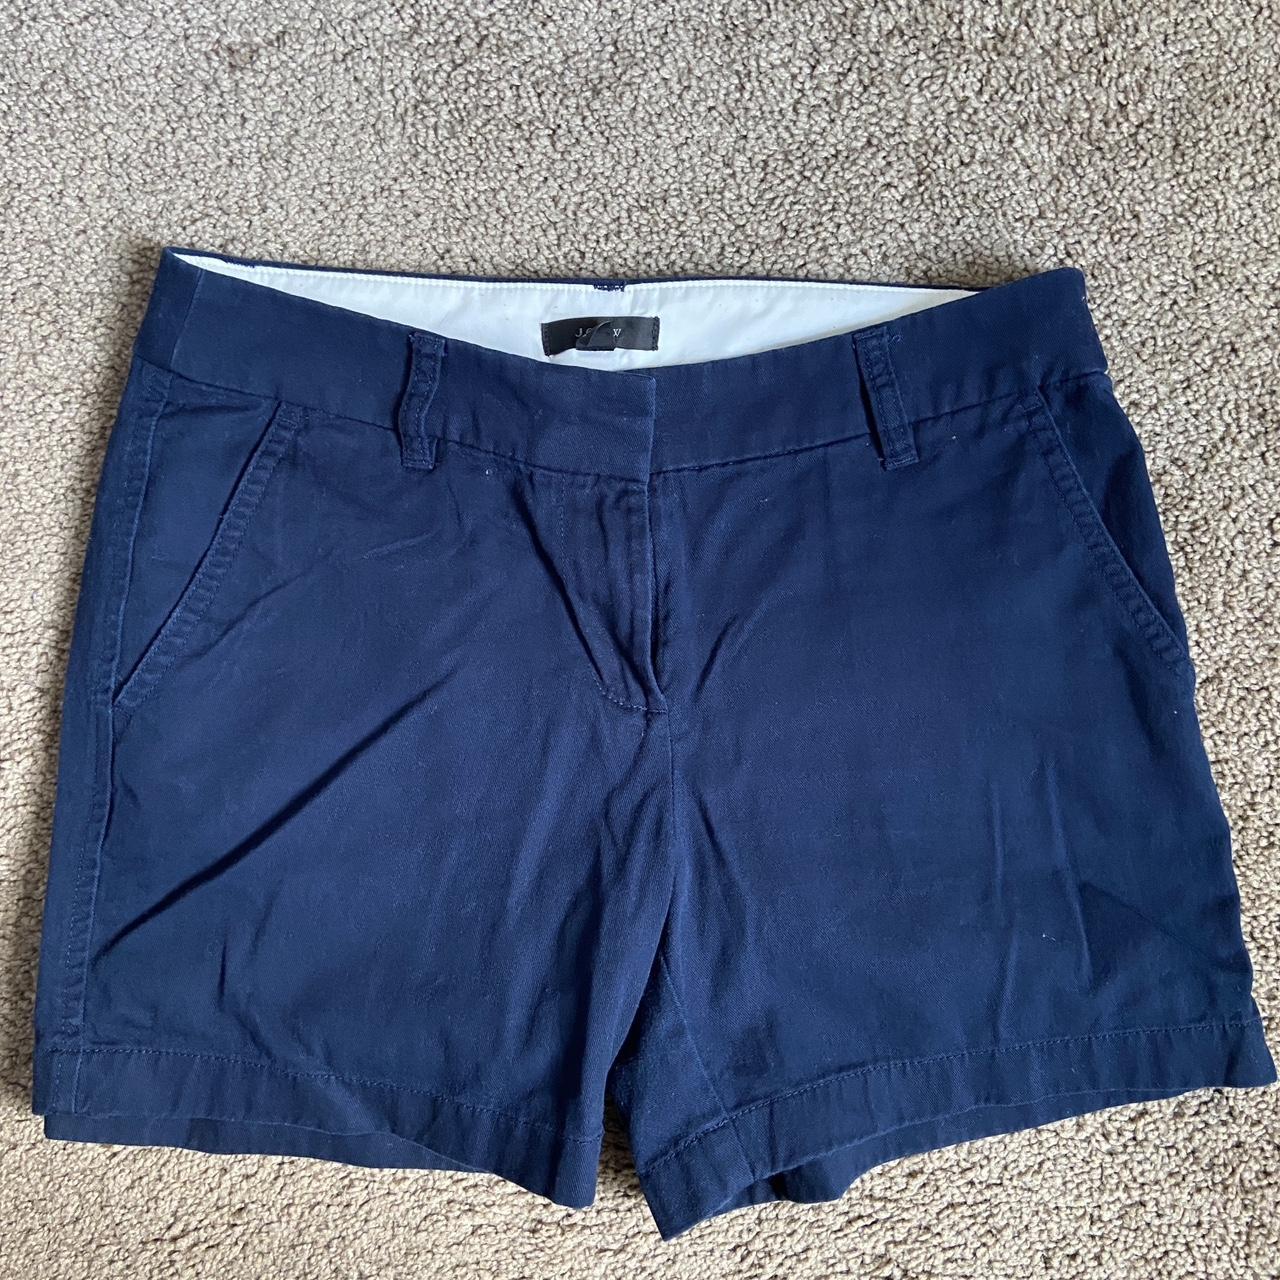 Crewcuts by J.Crew Women's Navy Shorts | Depop